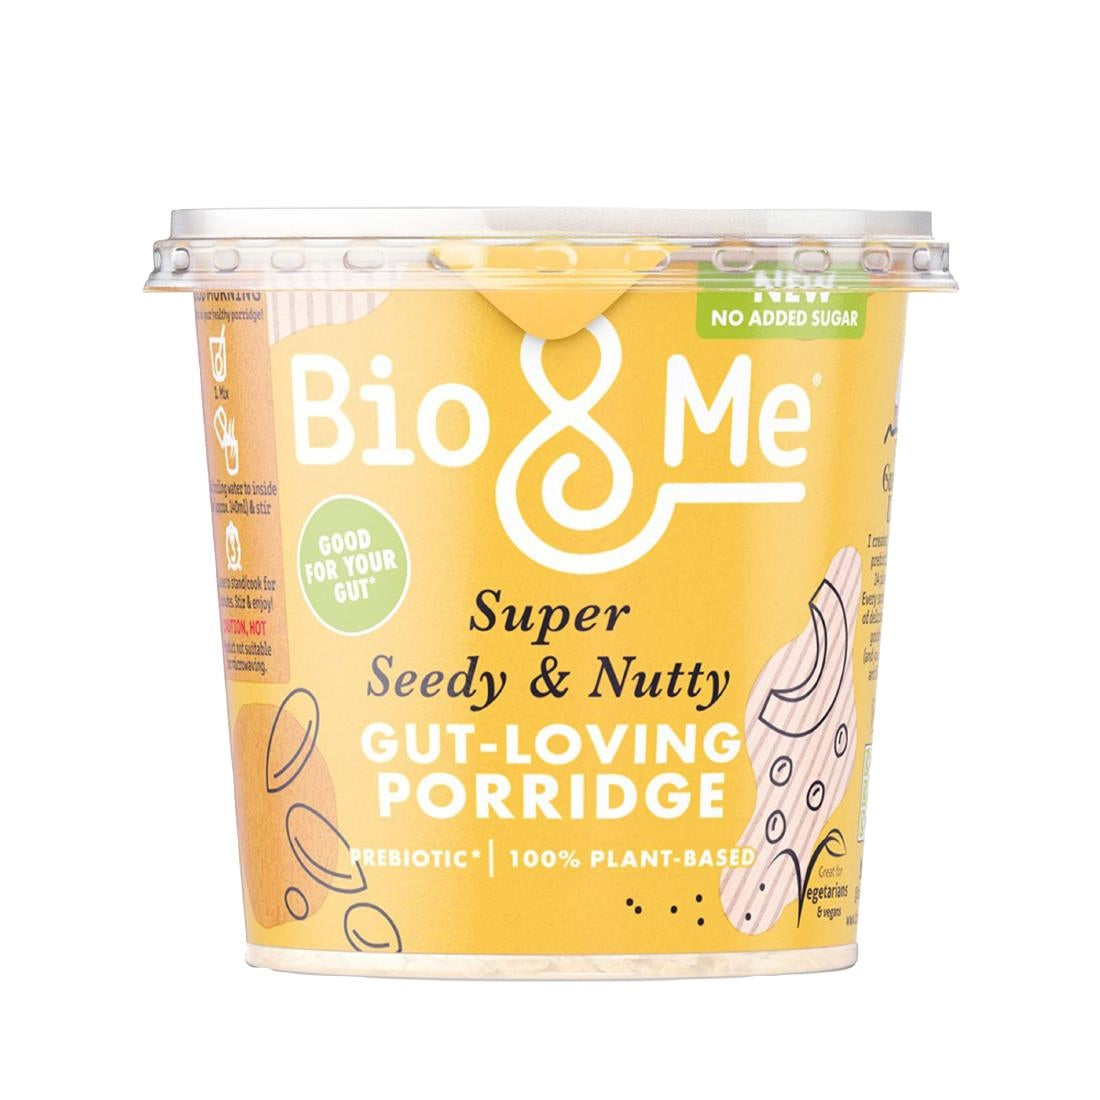 HS840 Bio&Me Super Seedy & Nutty Porridge Pots 58g (Pack of 8)